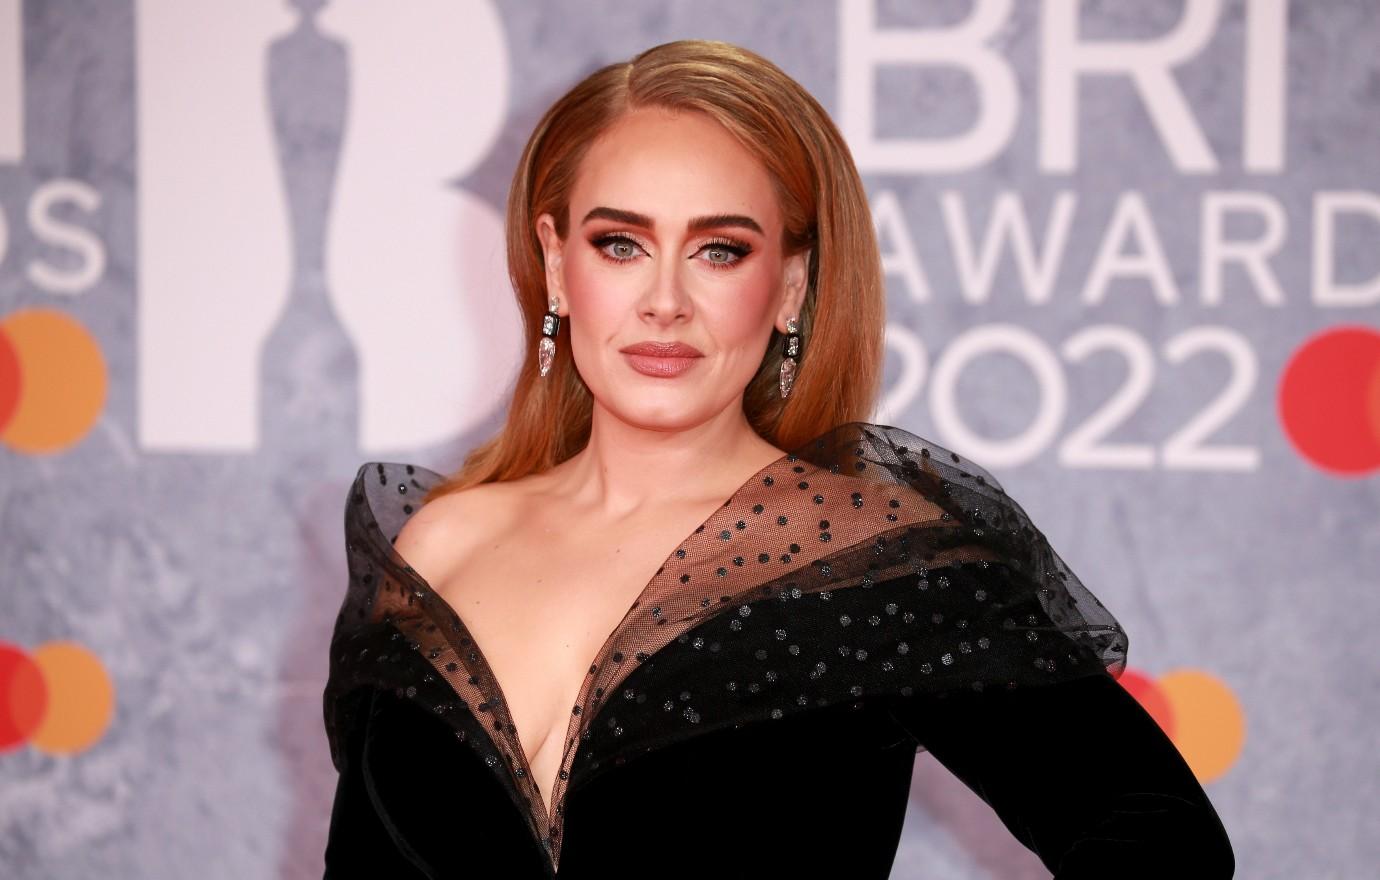 Production of Adele's Las Vegas shows sparked 'explosive arguments